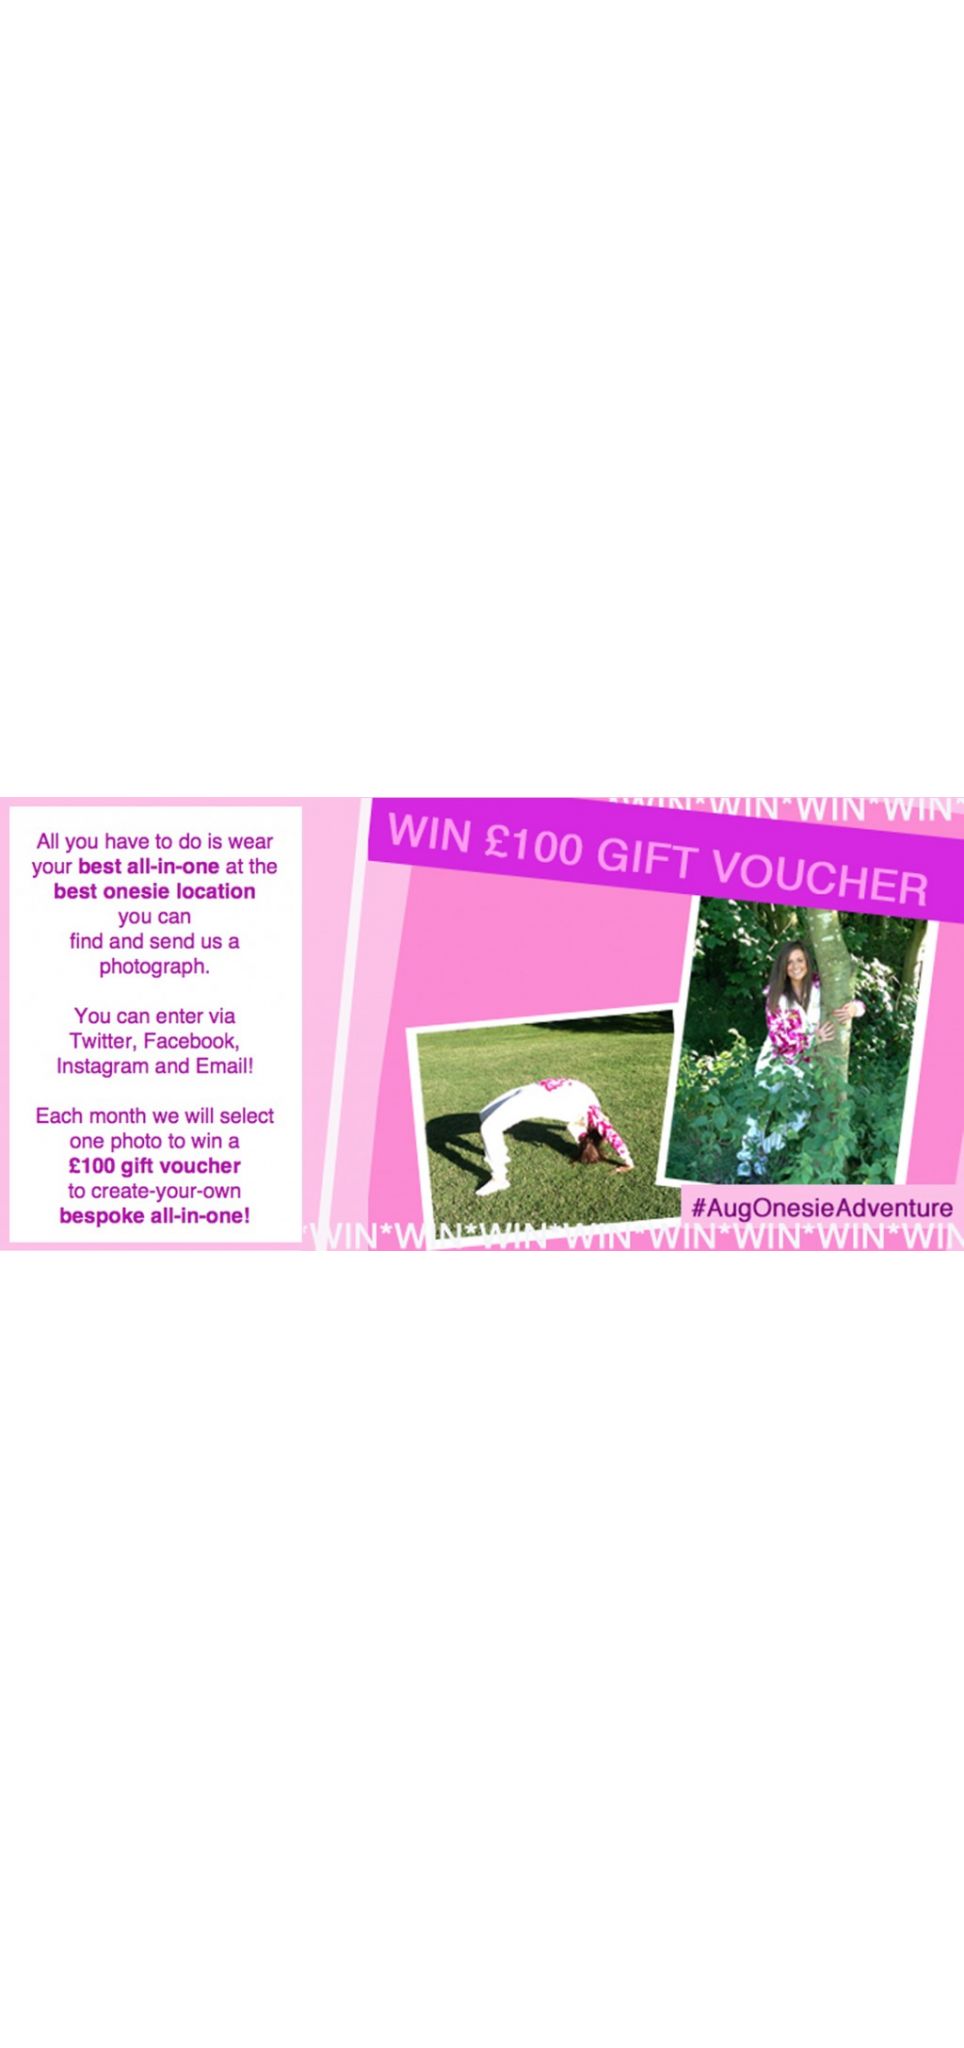 Win £100 gift voucher with your onesie adventure photograph